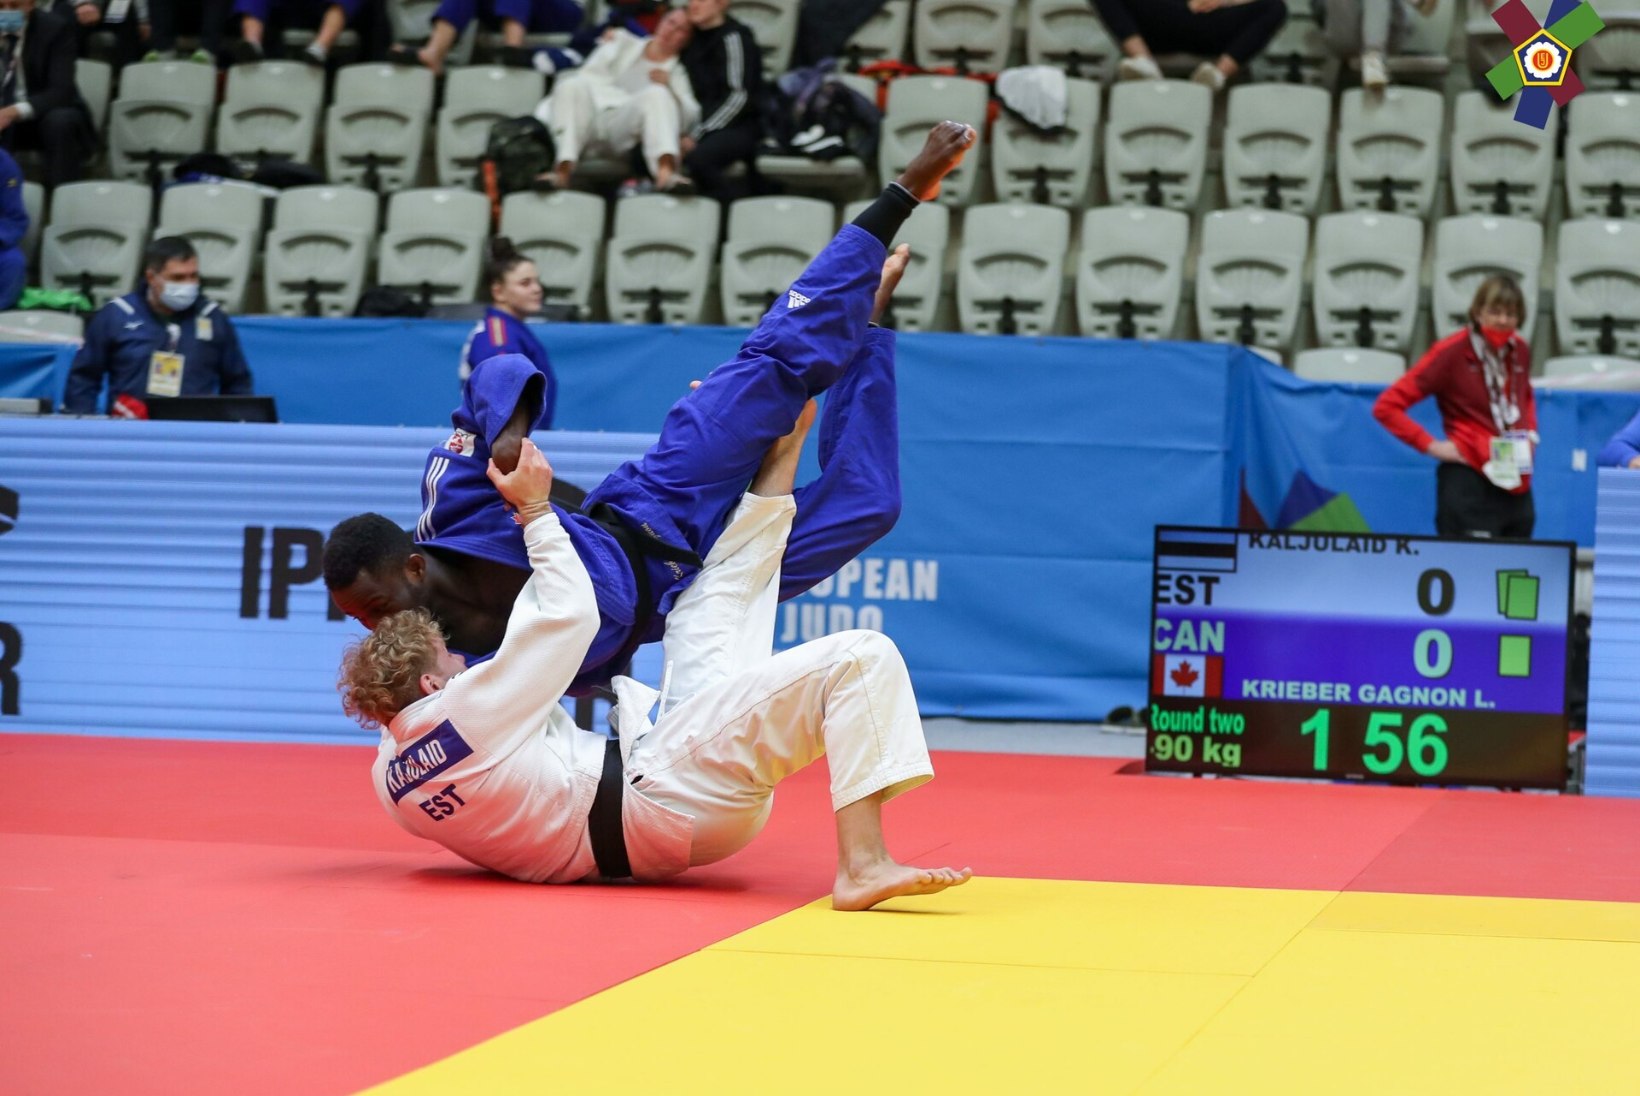 Eesti judoka kaotas MK-etapil pronksimatši